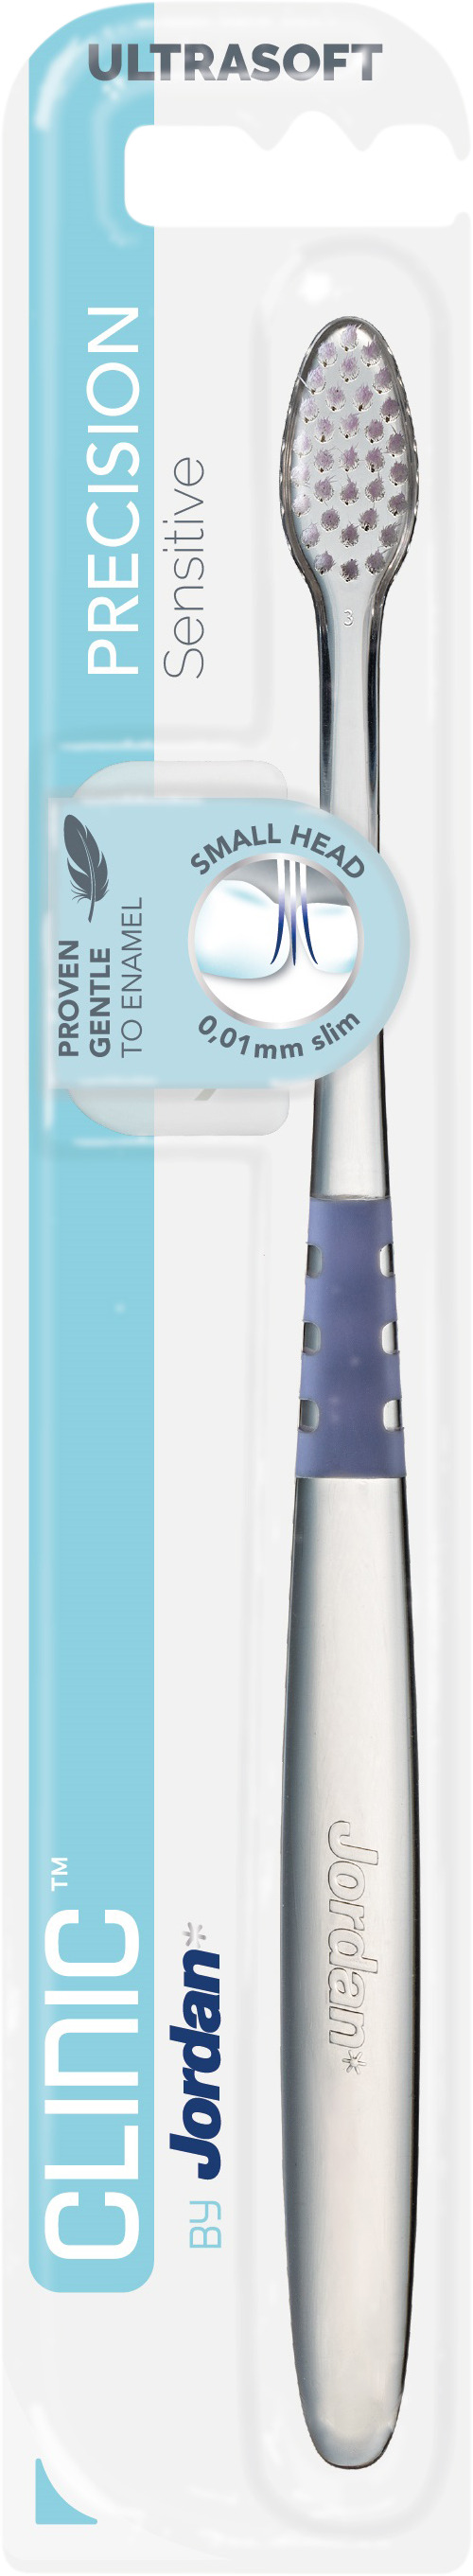 Jordan Clinic Precision Sensitive Ultrasoft Tandborste 1 st